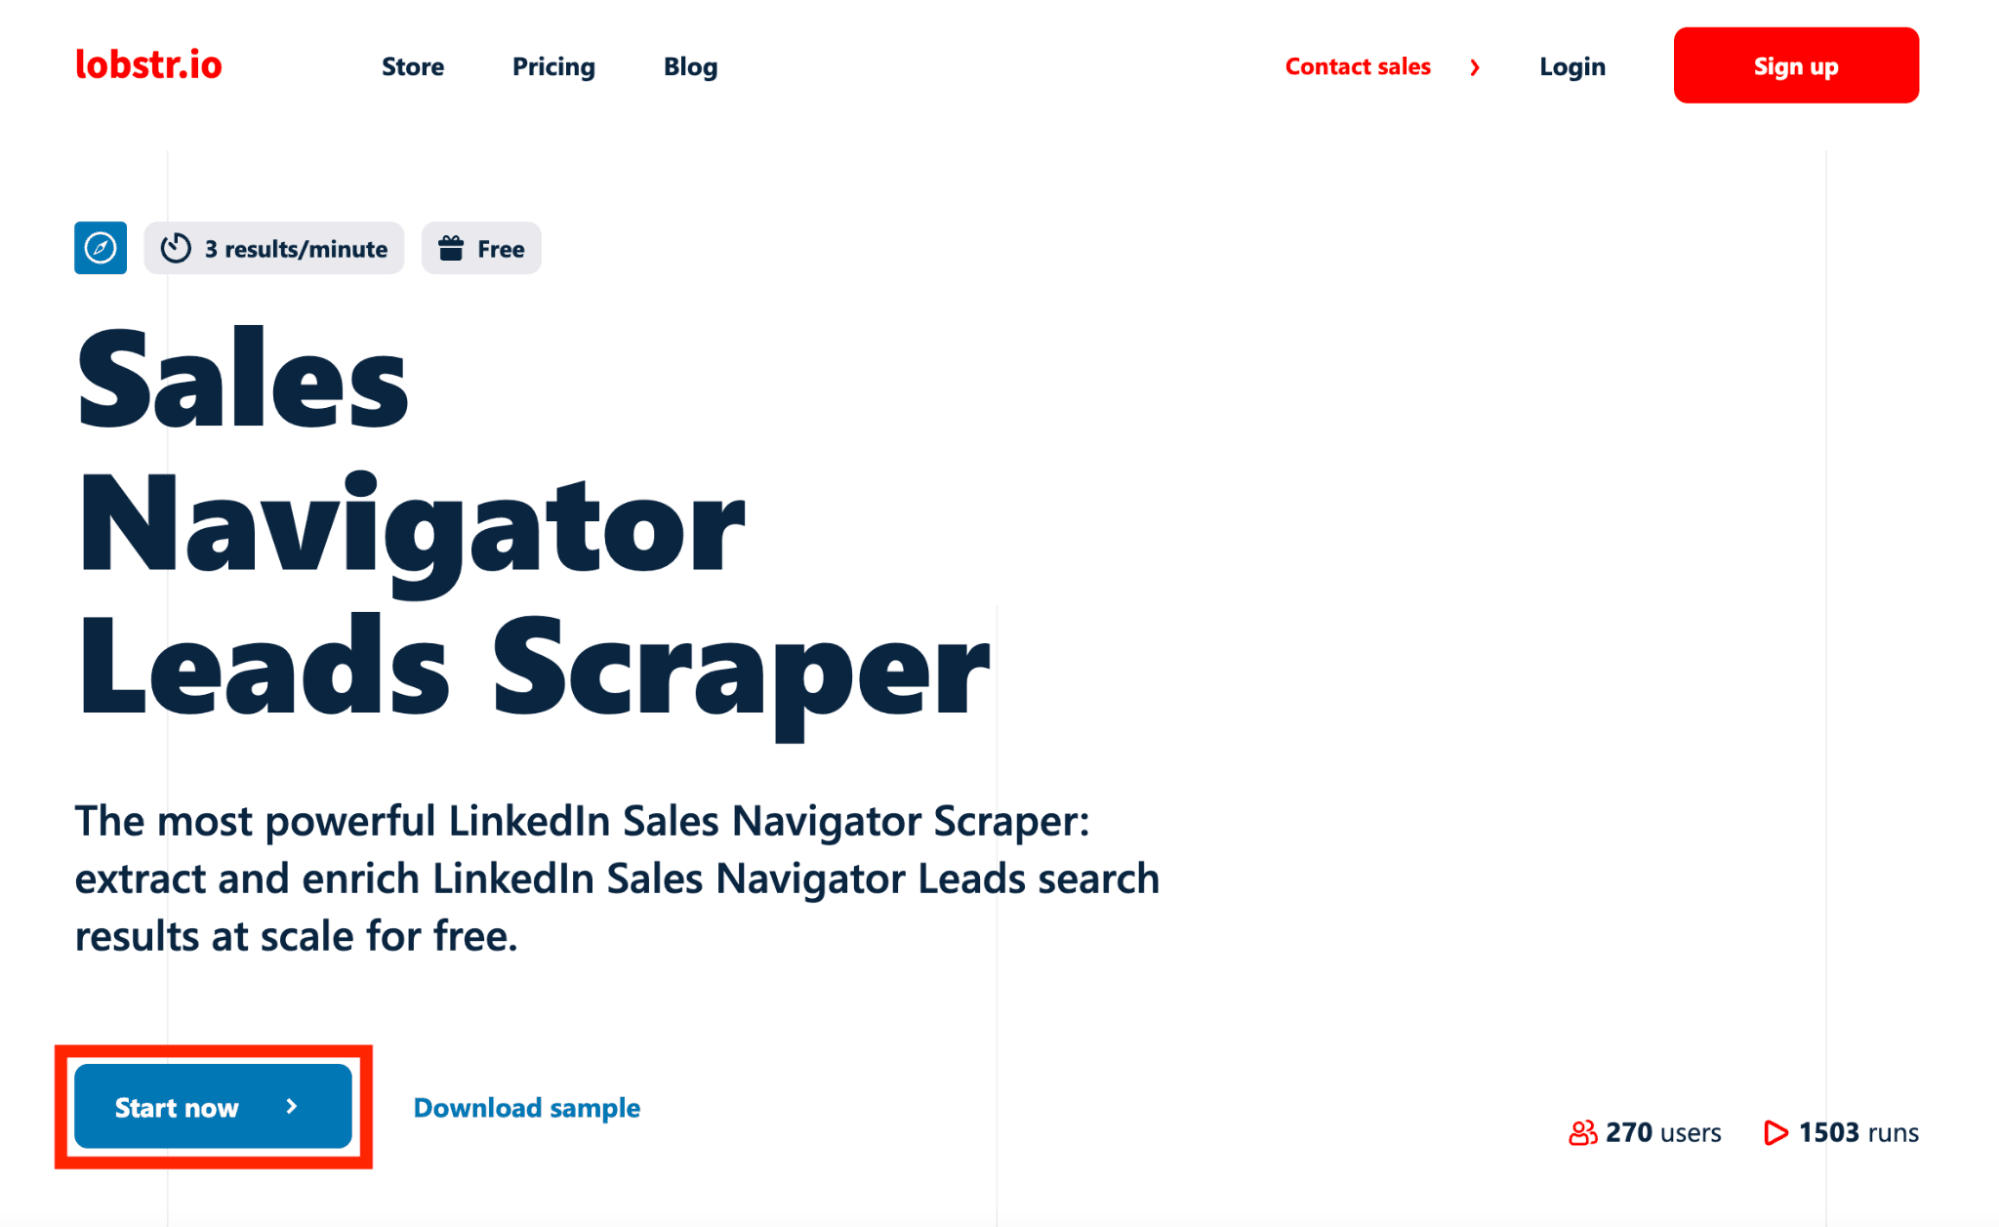 lobstr sales navigator leads scraper - image1.png